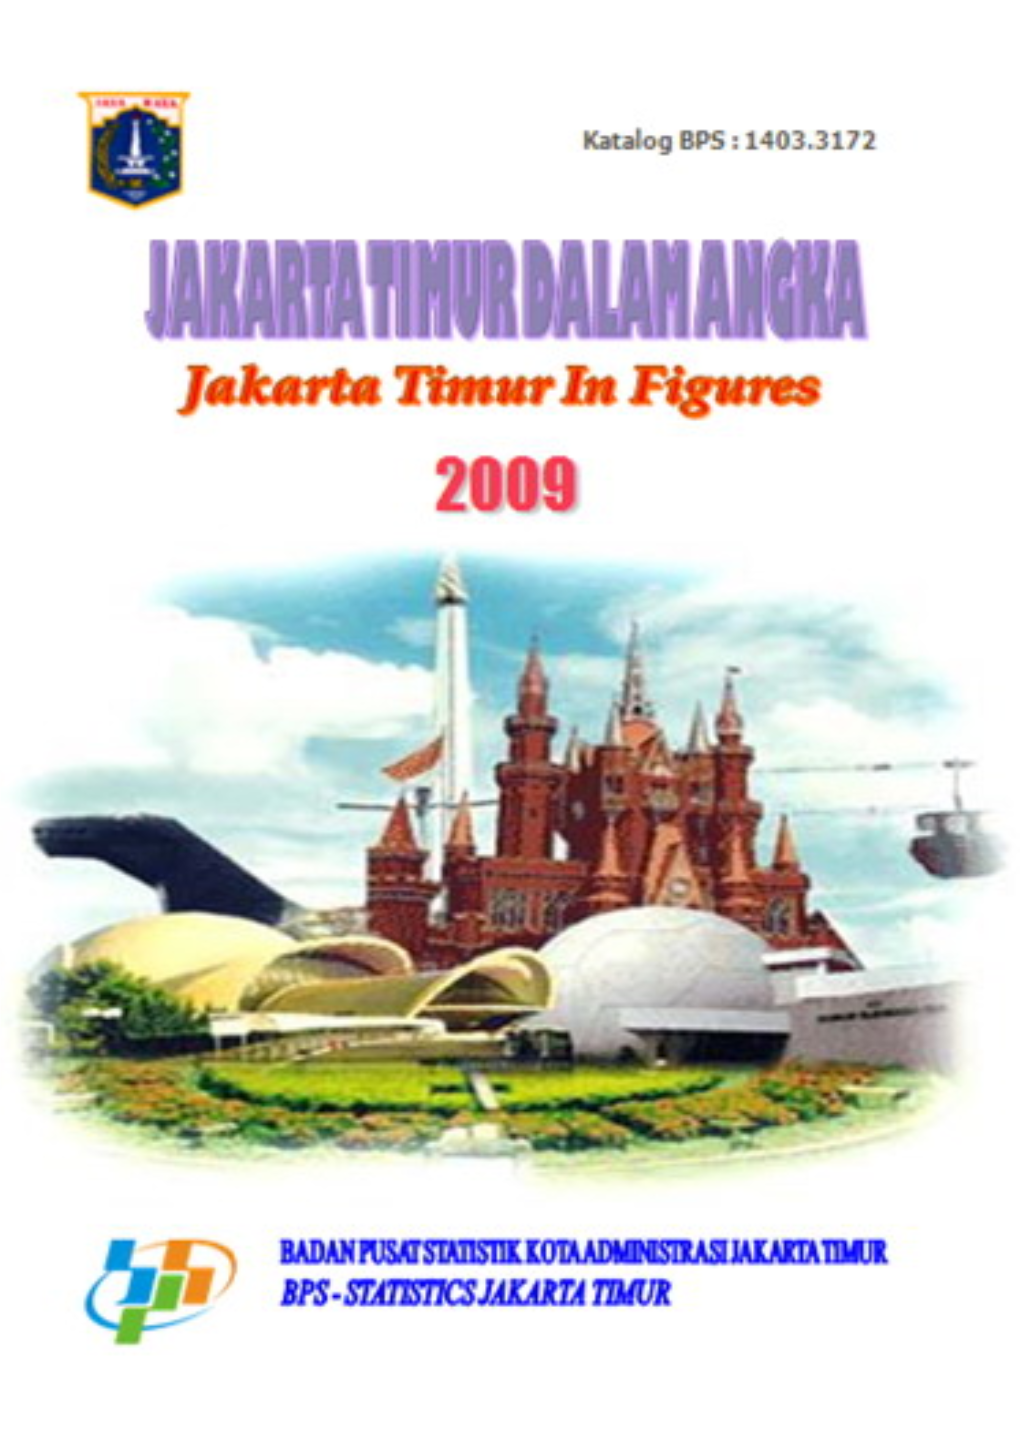 Jakarta Timur Dalam Angka Jakarta Timur in Figures 2009